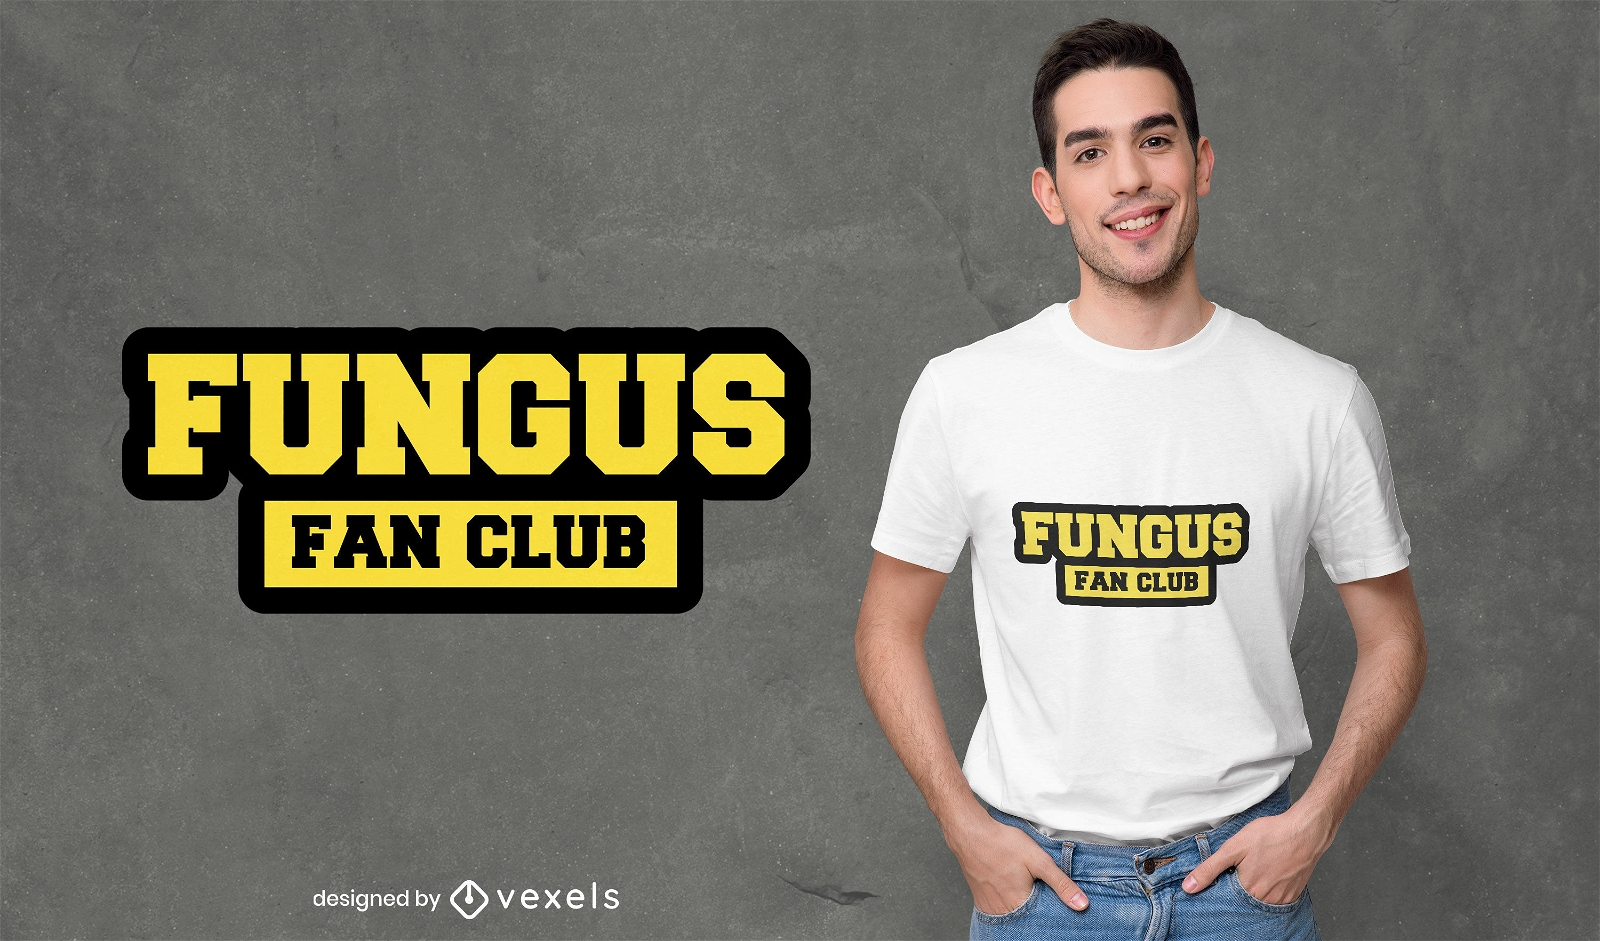 Fungus fan club t-shirt design